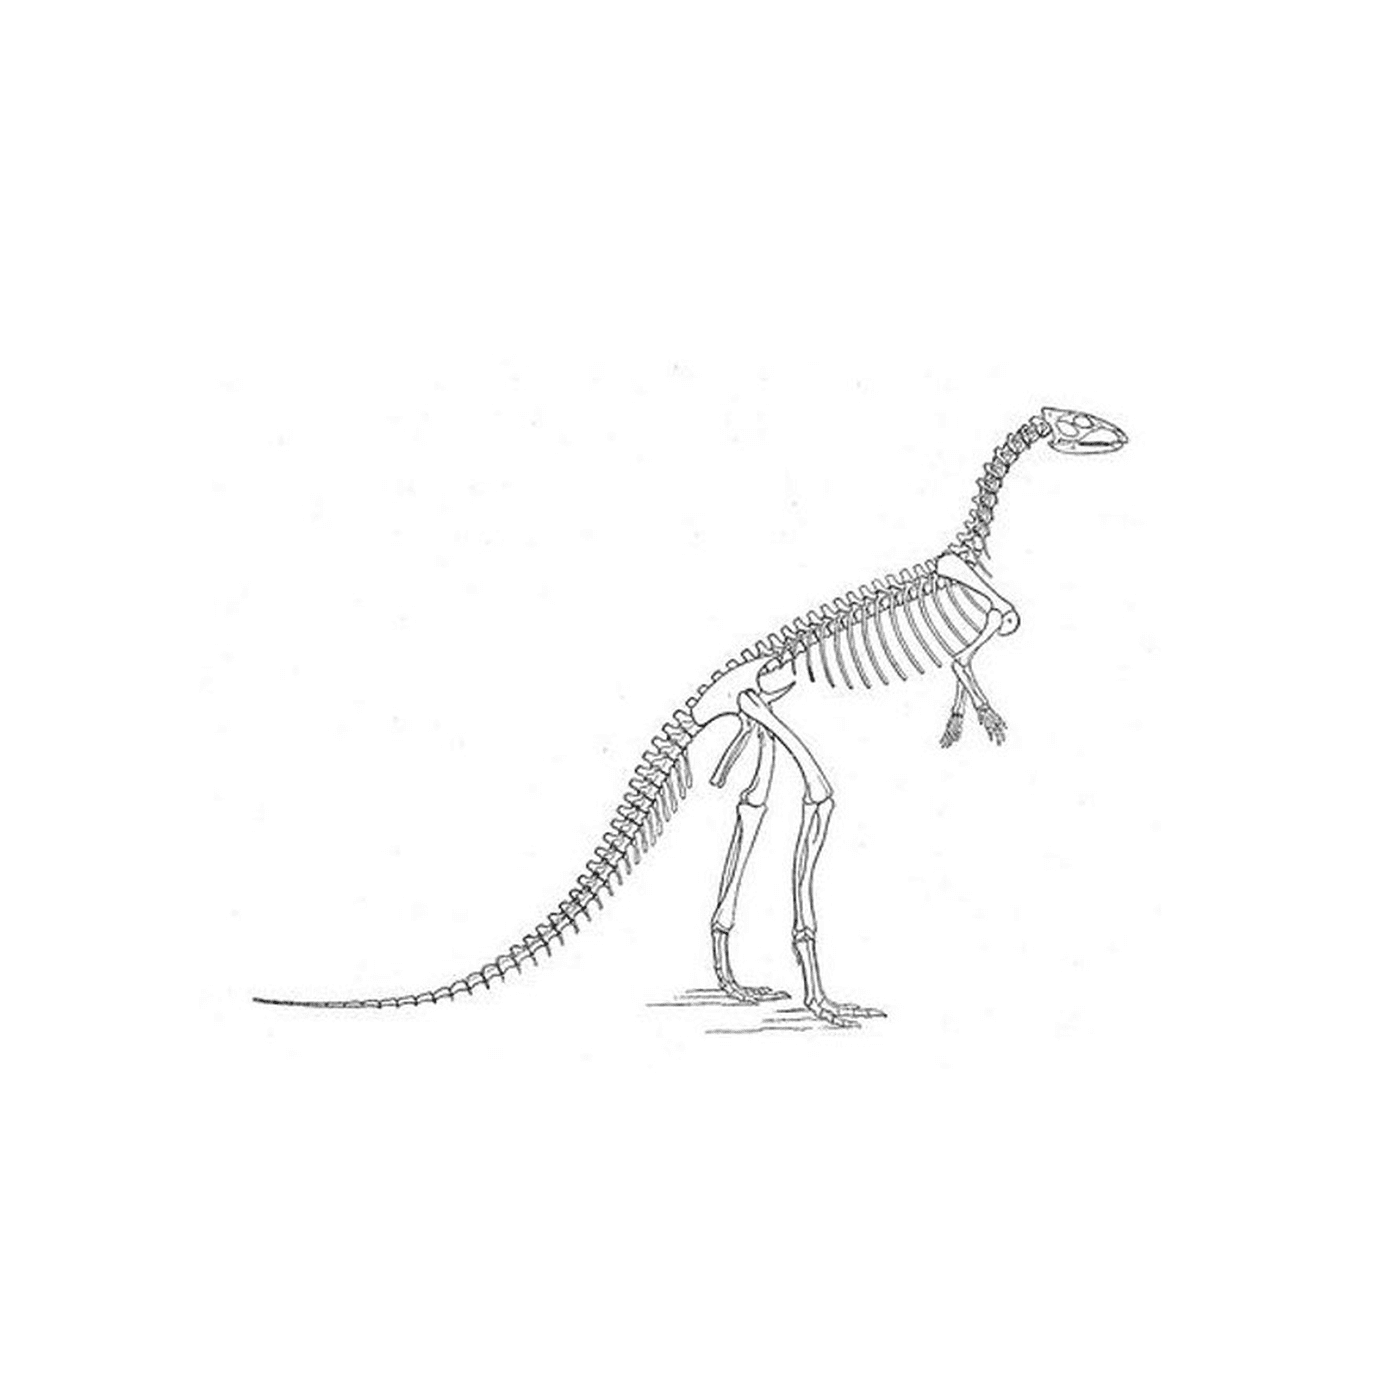  Скелет динозавра 